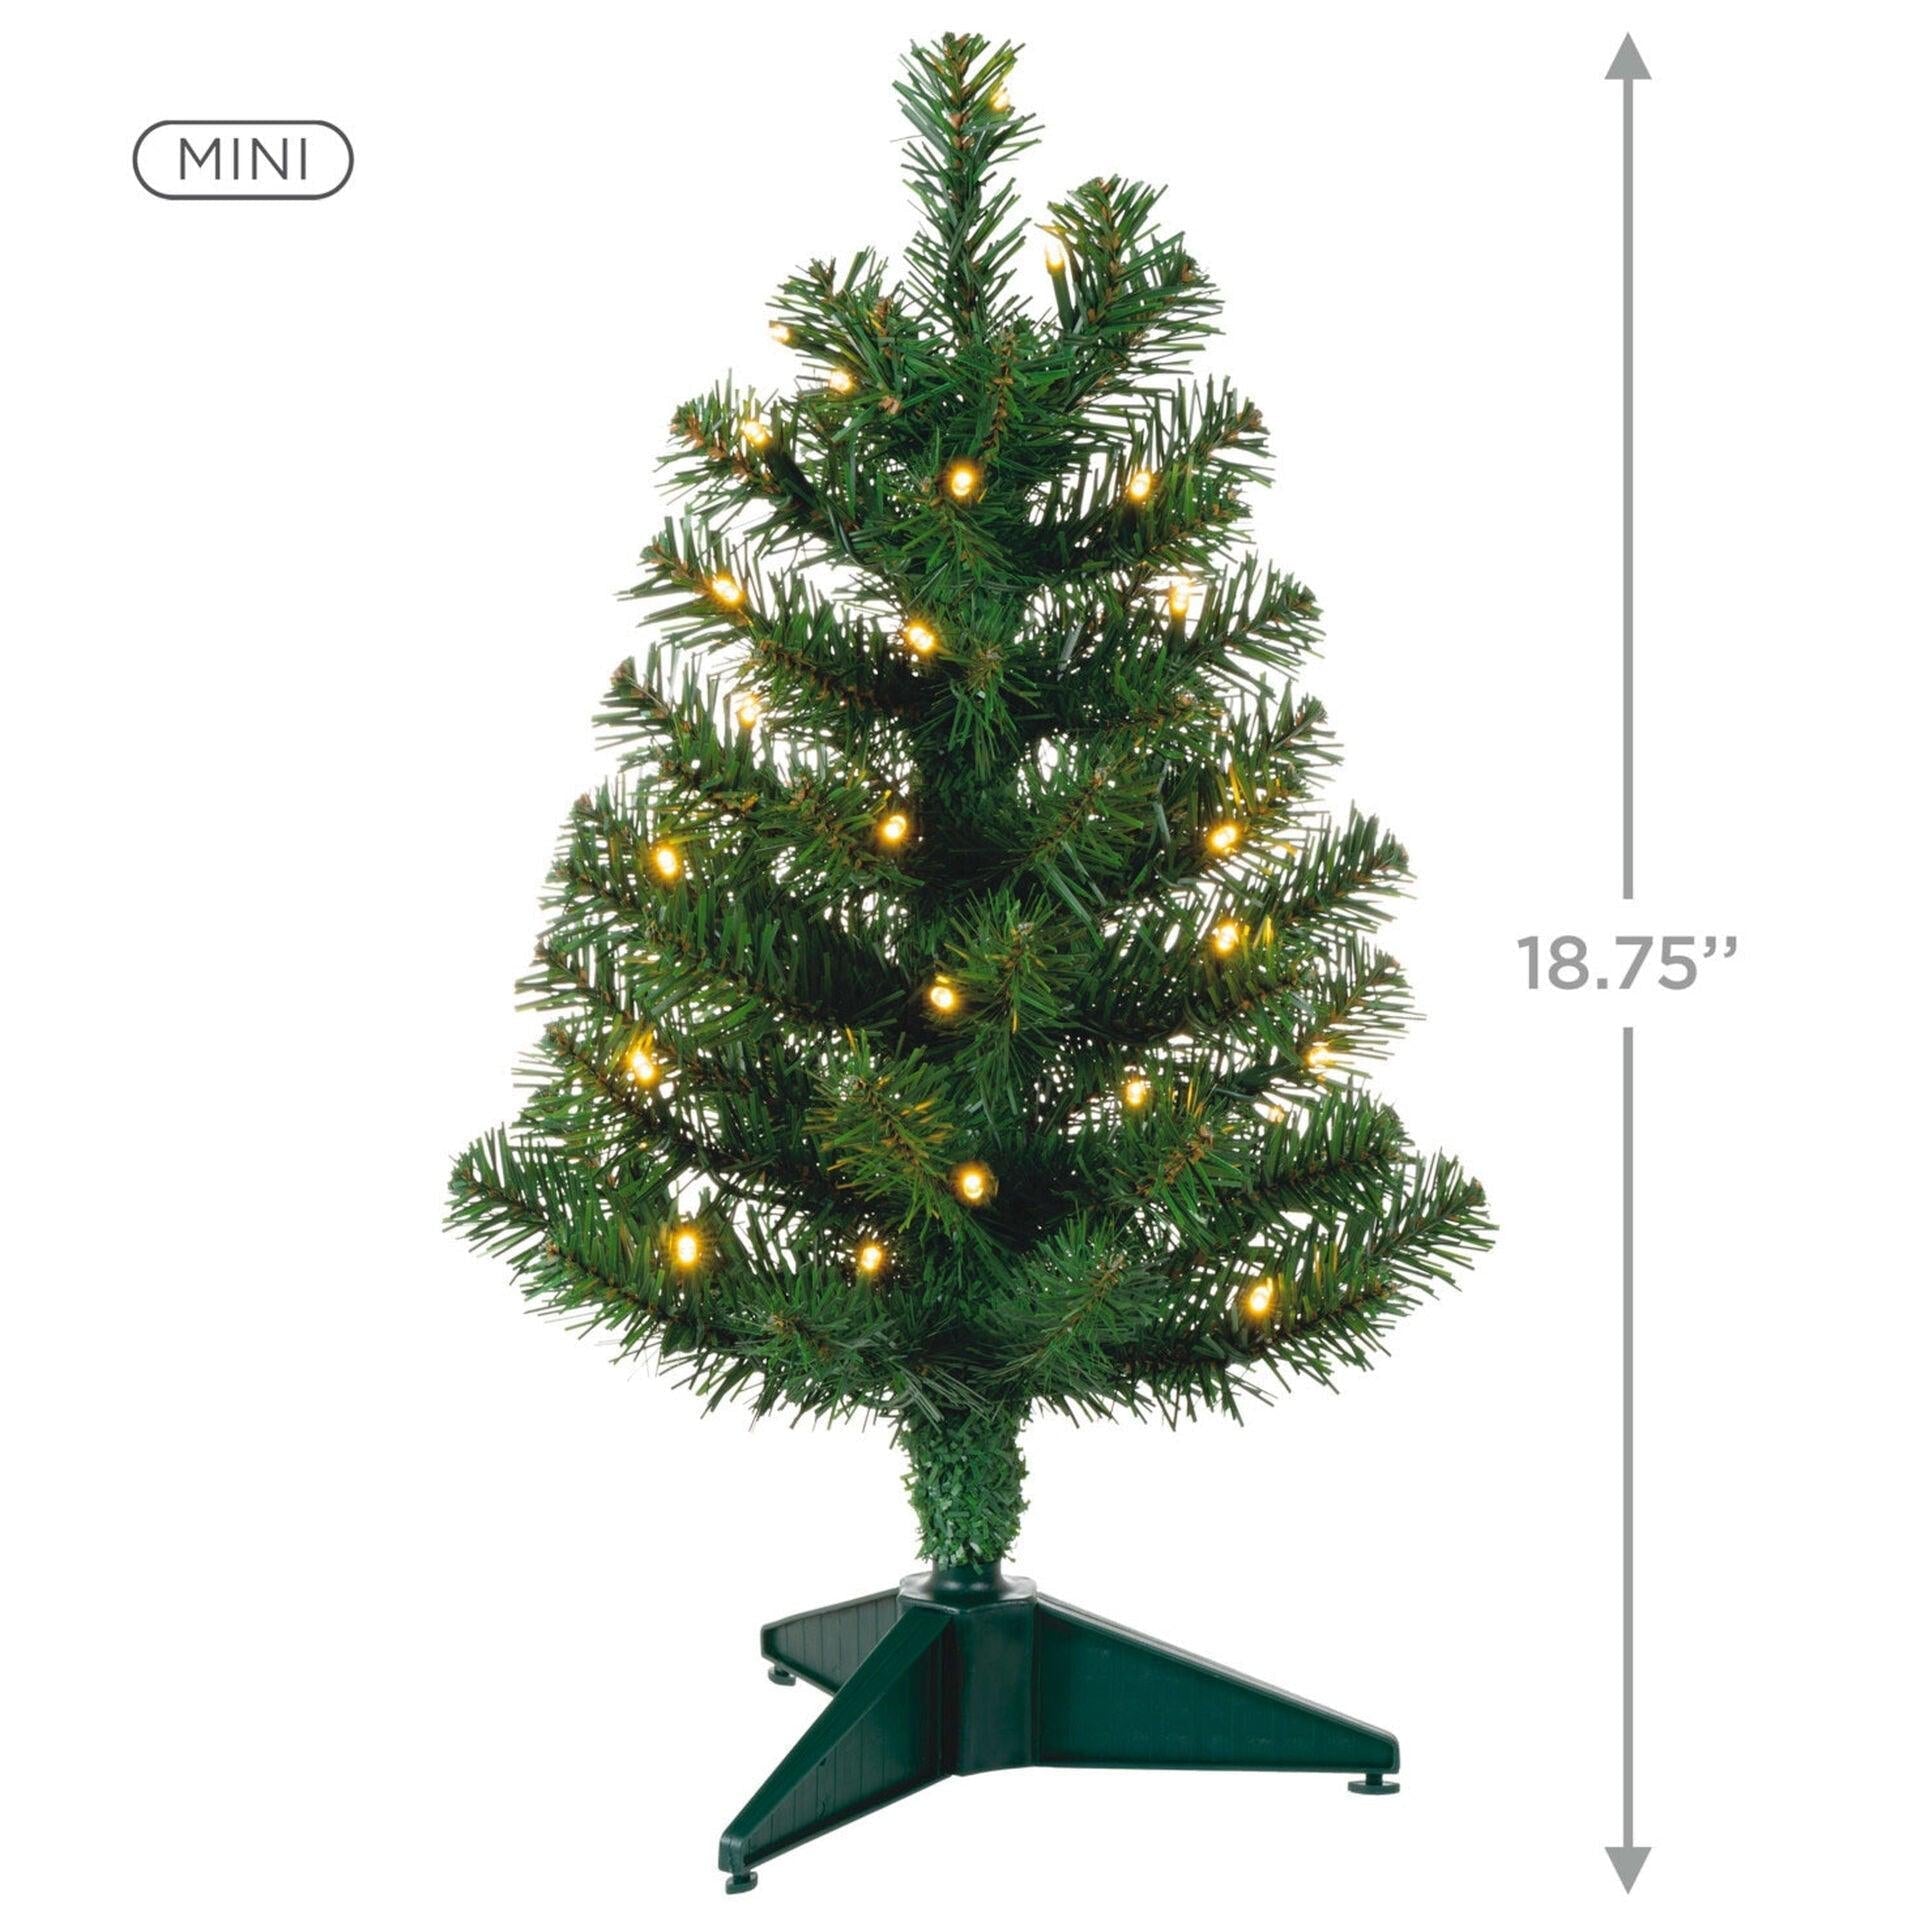 Miniature Evergreen Pre-Lit Christmas Tree, 18.75"